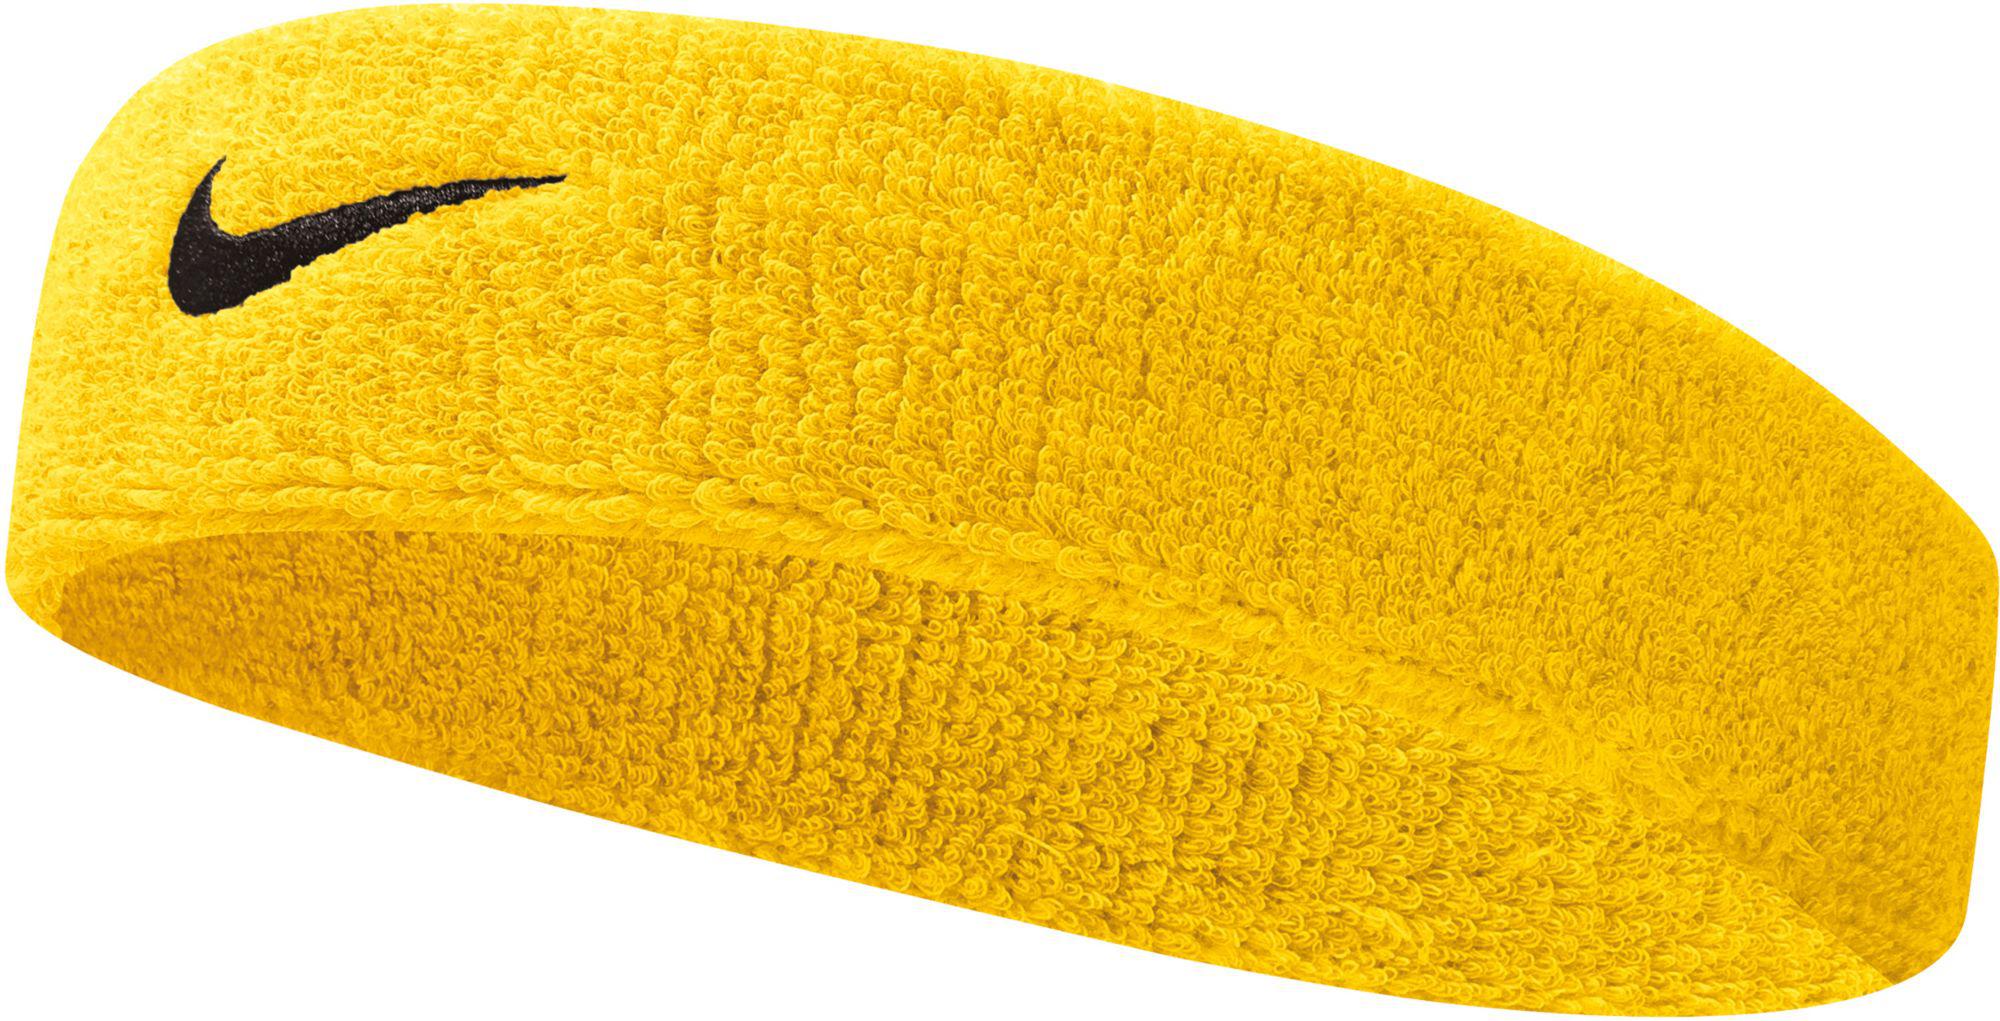 Nike Cotton Swoosh Headband - 2" in Yellow/Black (Yellow) - Lyst